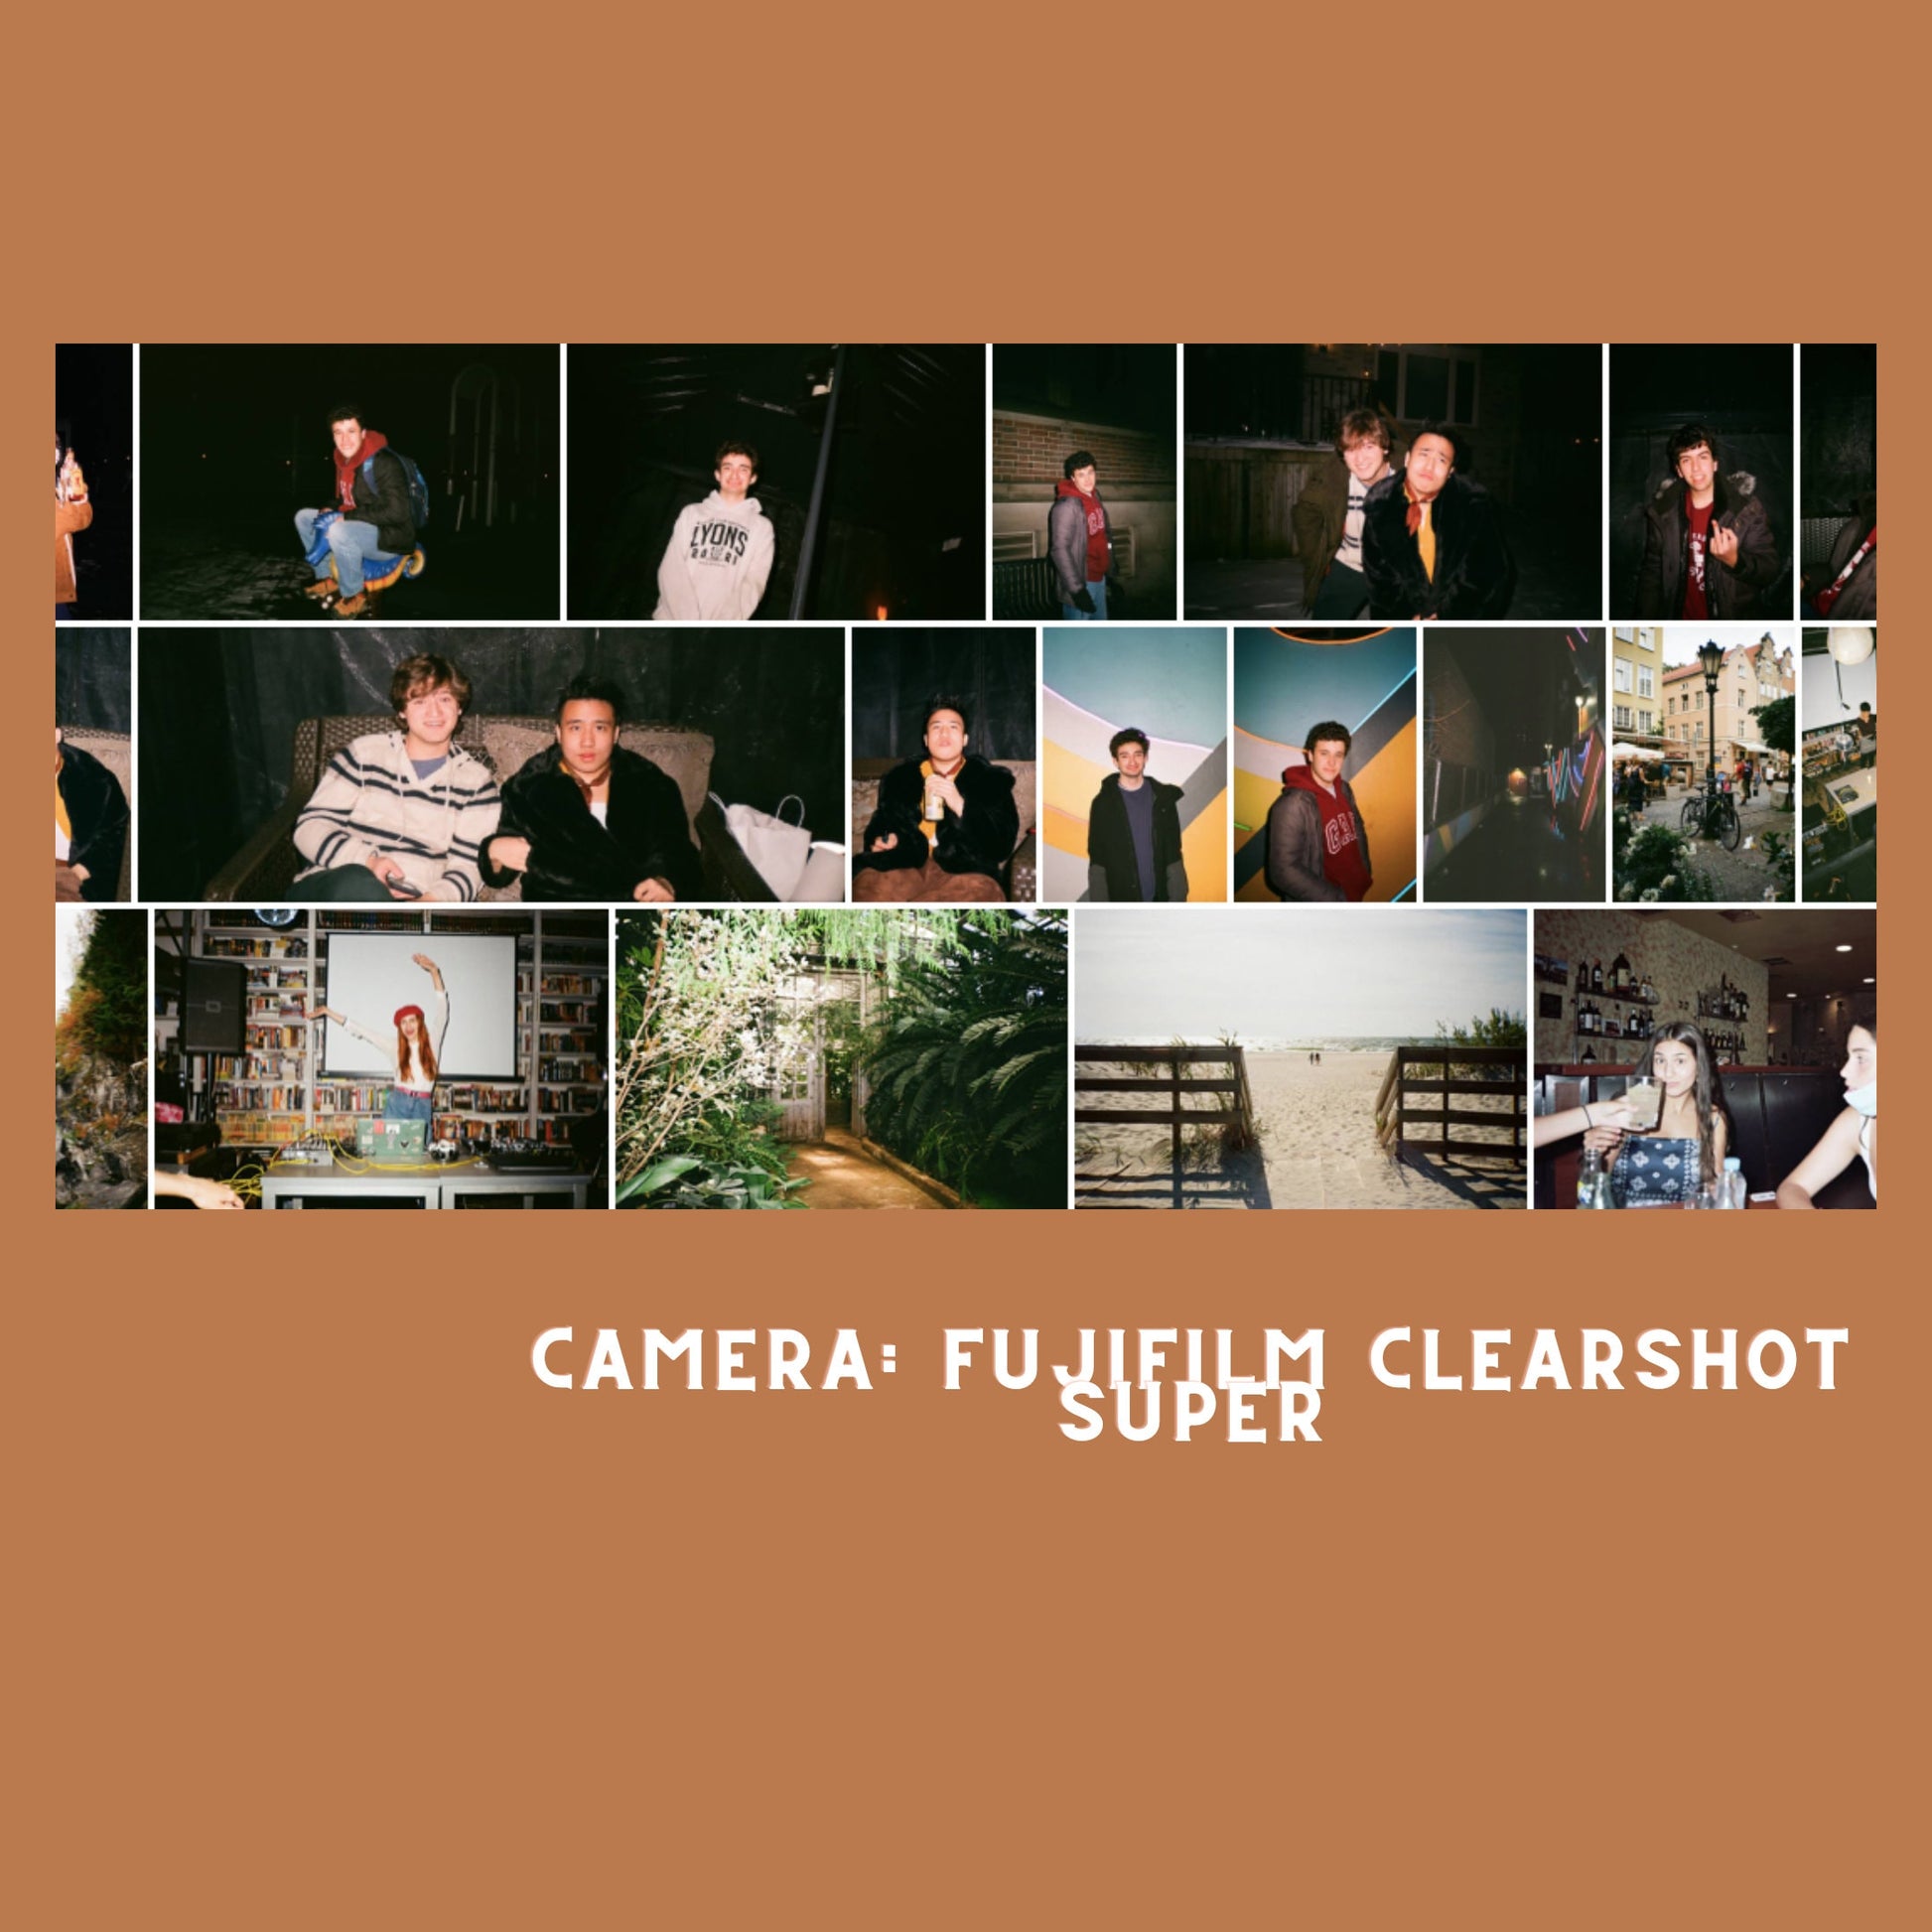 NEW ARRIVAL!! Fujifilm Clearshot Super, Working Film Camera, Vintage Camera - Vintage Polaroid Instant Cameras